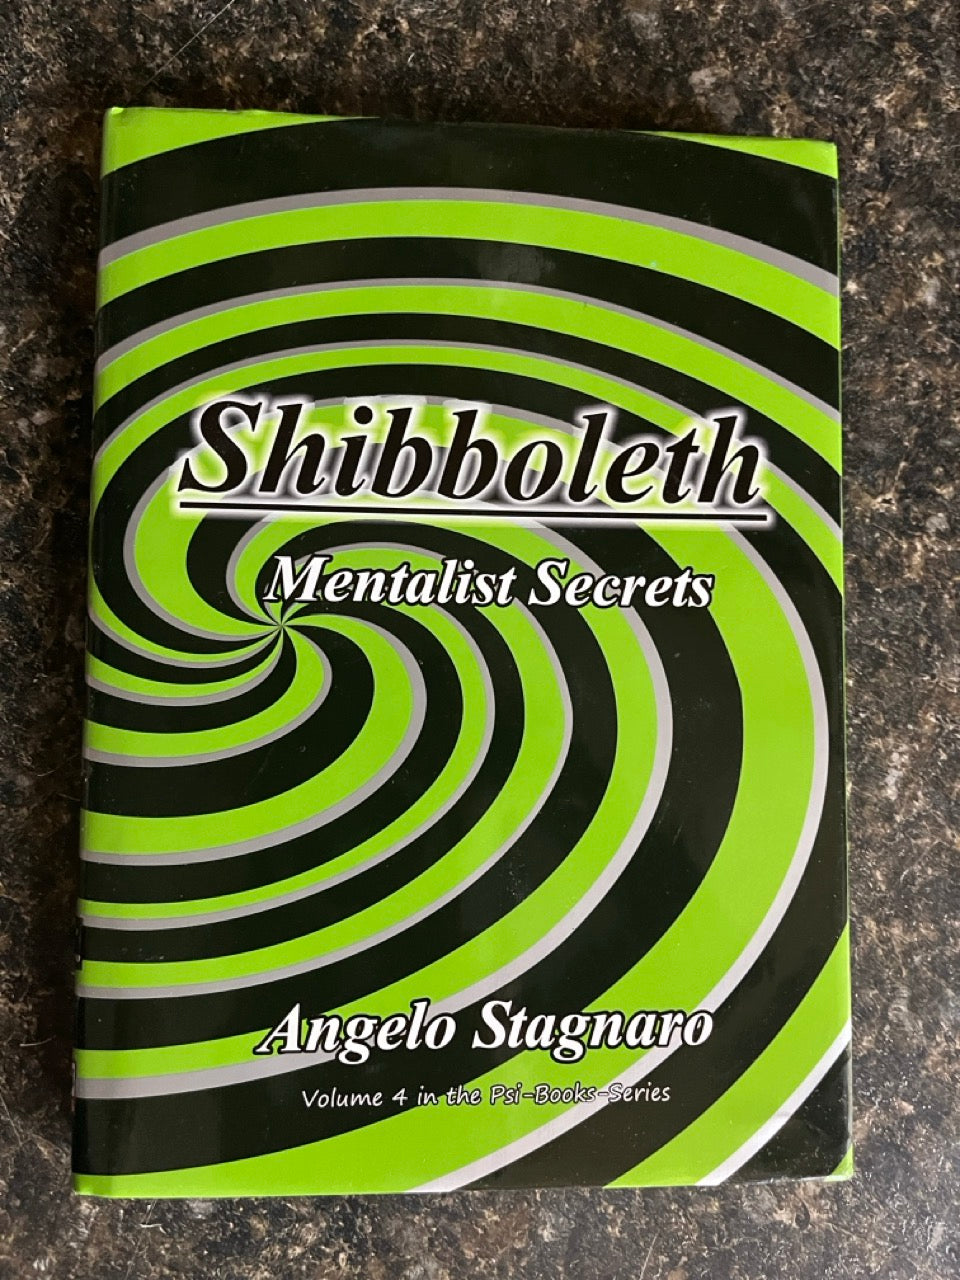 Shibboleth: Mentalist Secrets - Angelo Stagnaro - SIGNED